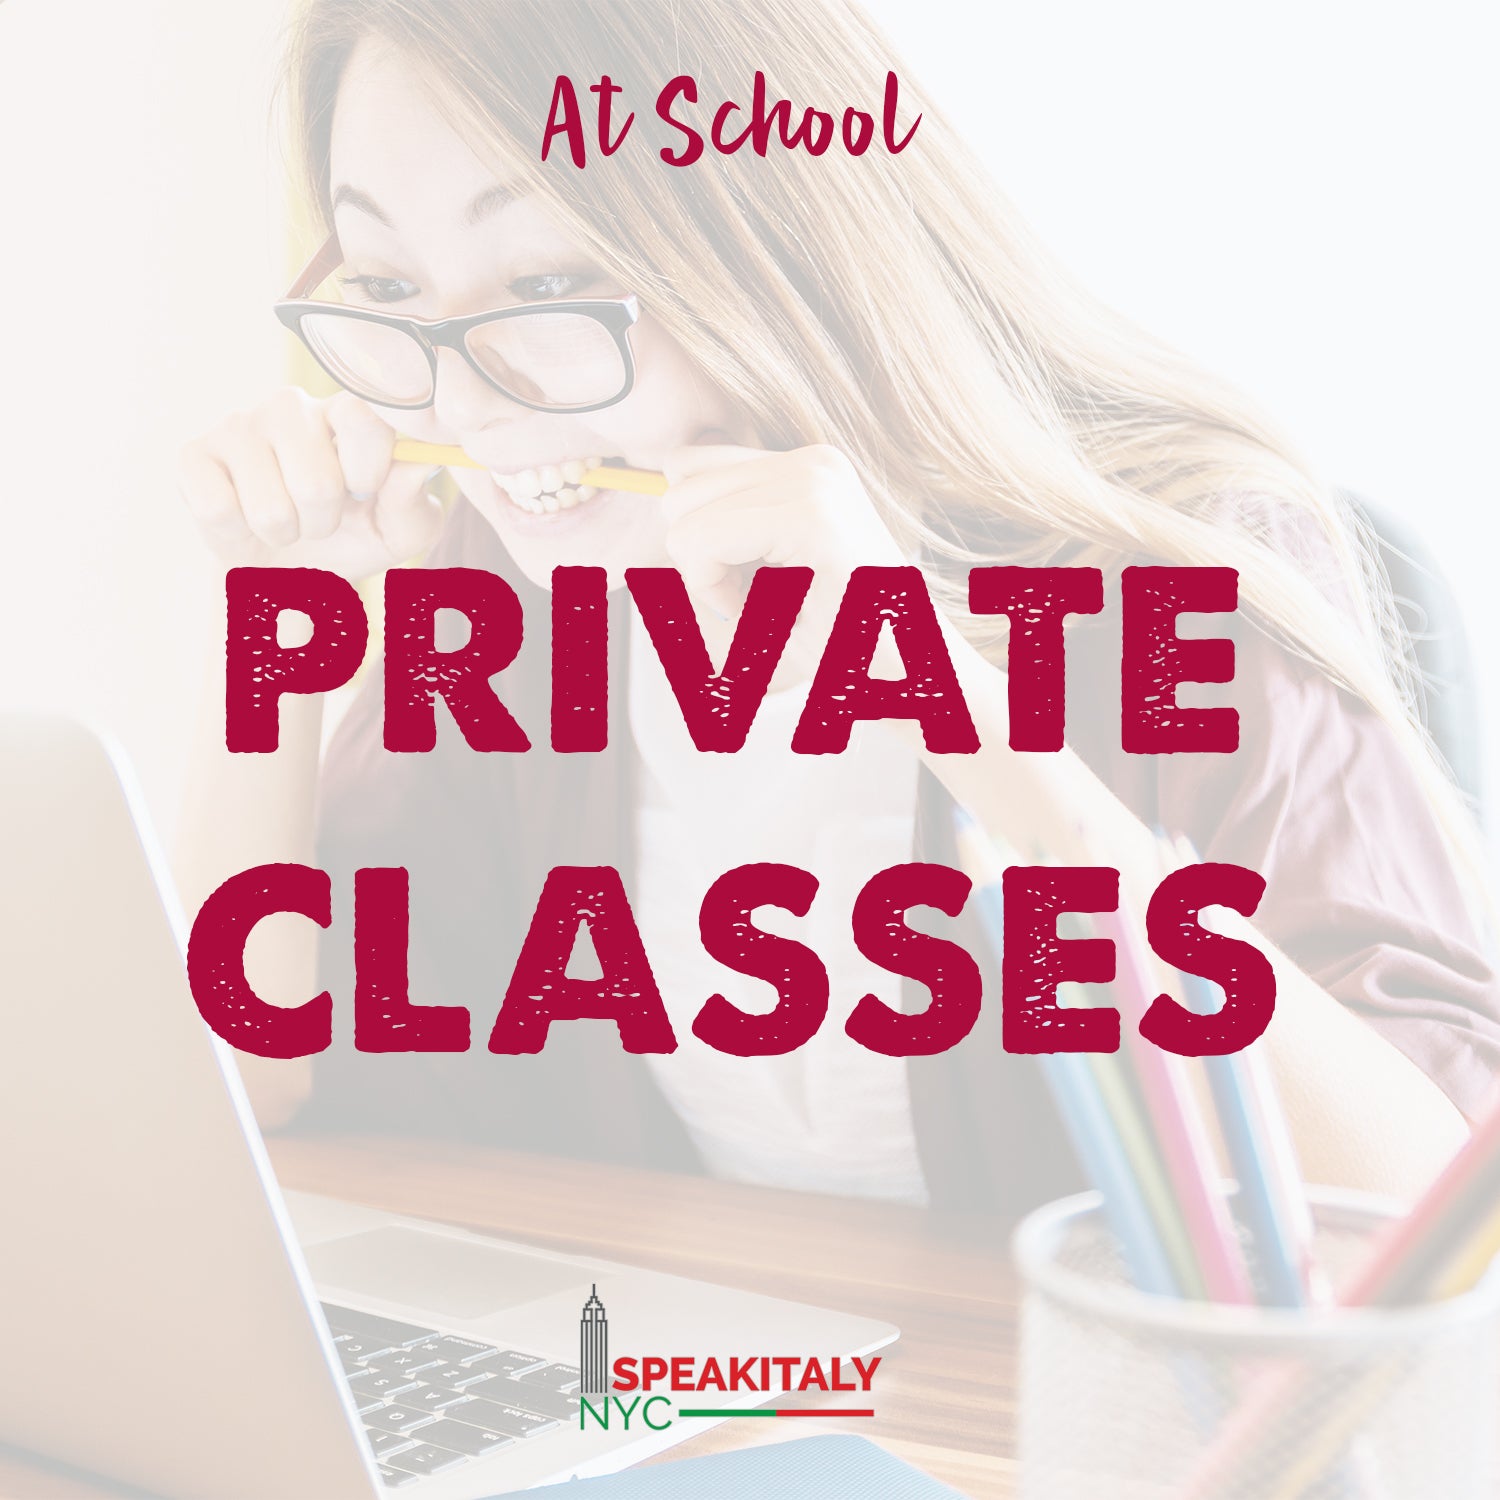 Private Classes - At School 1